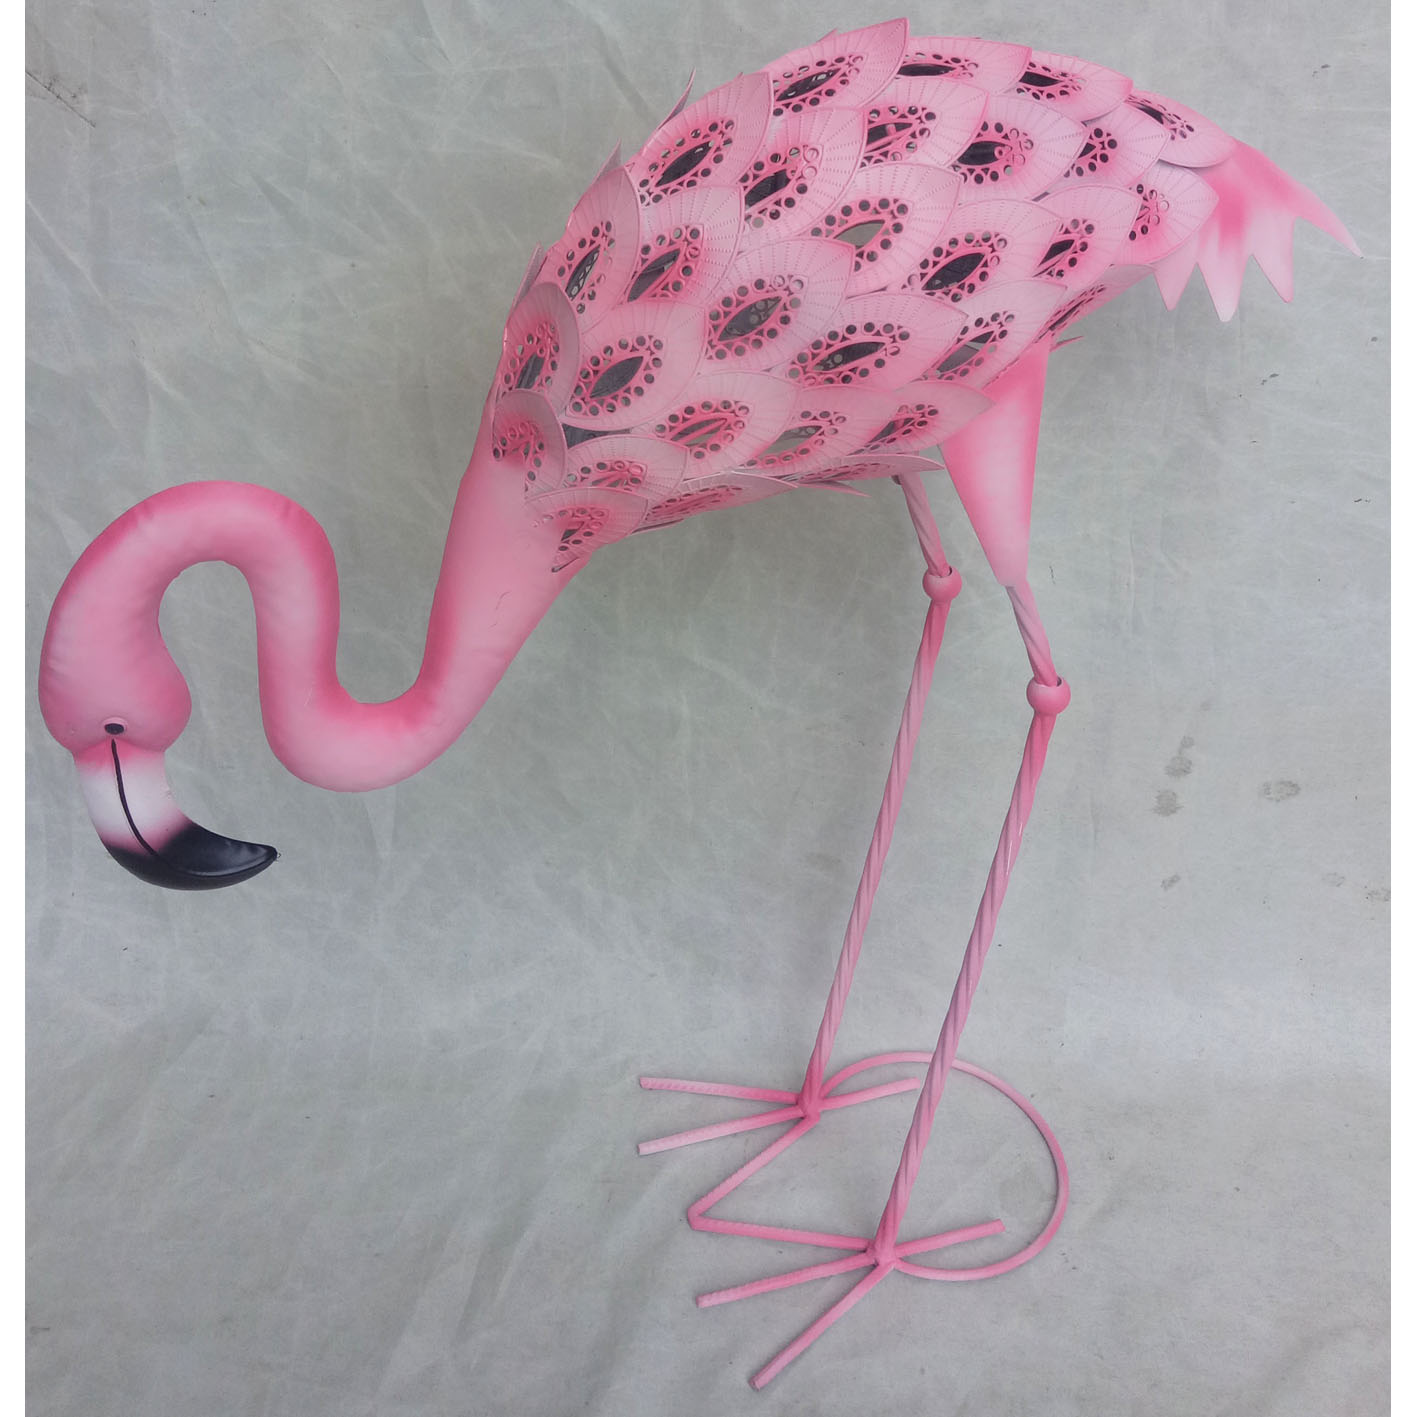 Hand-made metal garden decor pink flamingo ornament